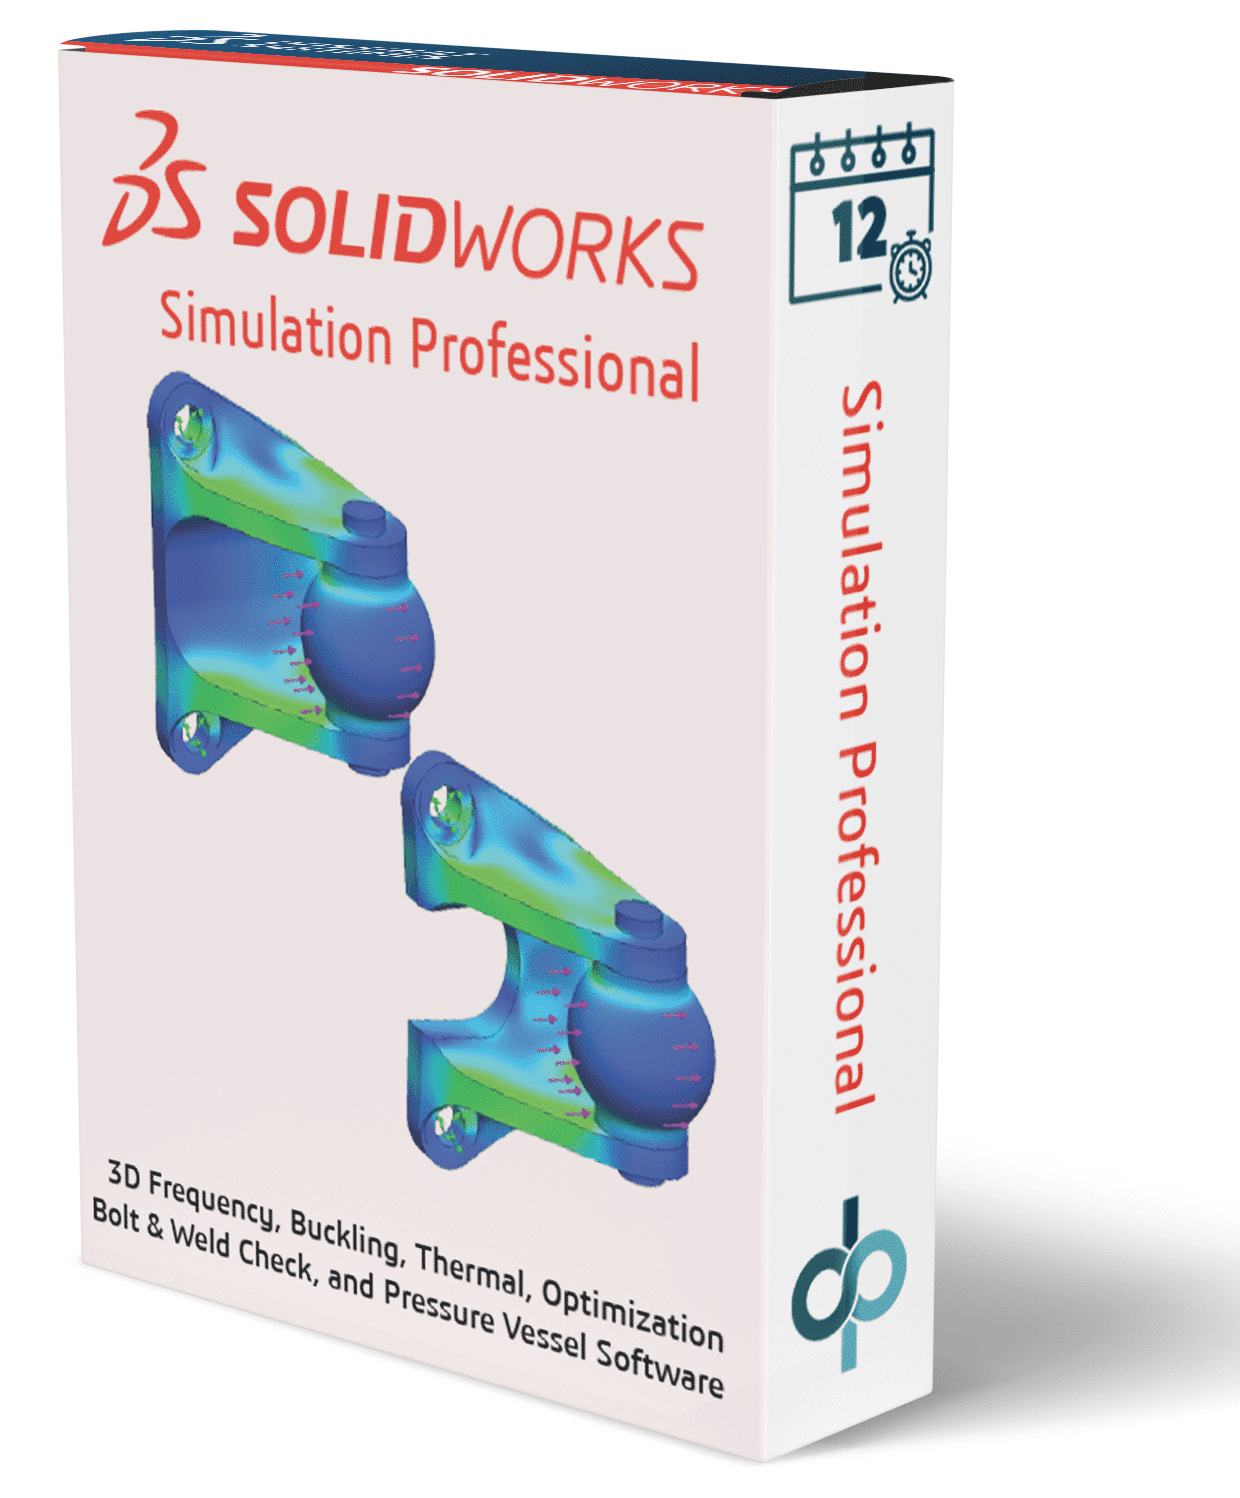 download link for solidworks simulation professional